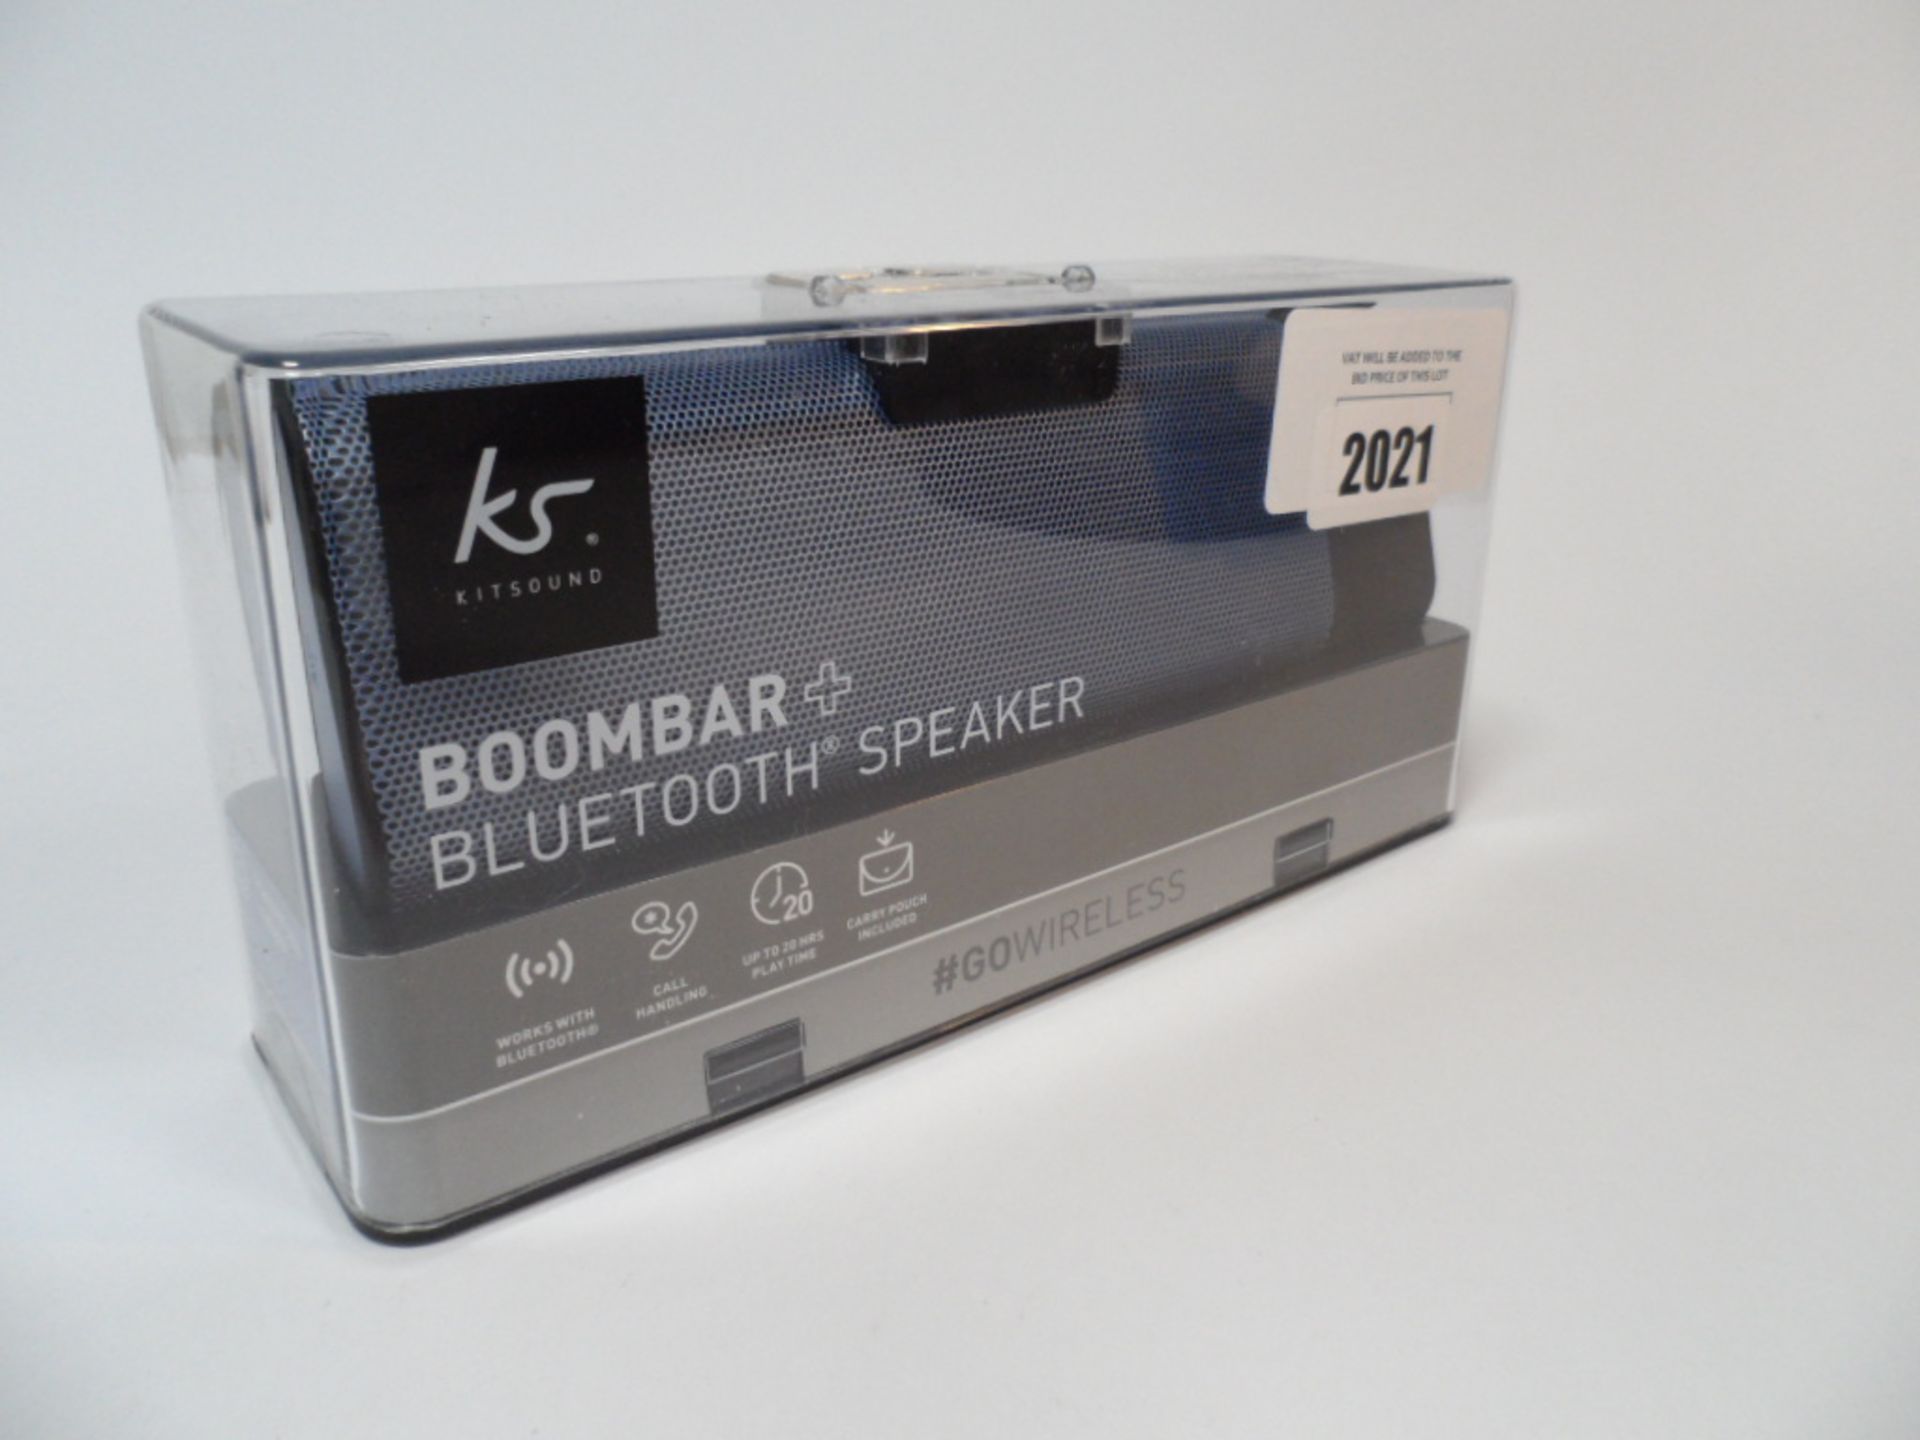 Kitsound BoomBar+ bluetooth speaker.